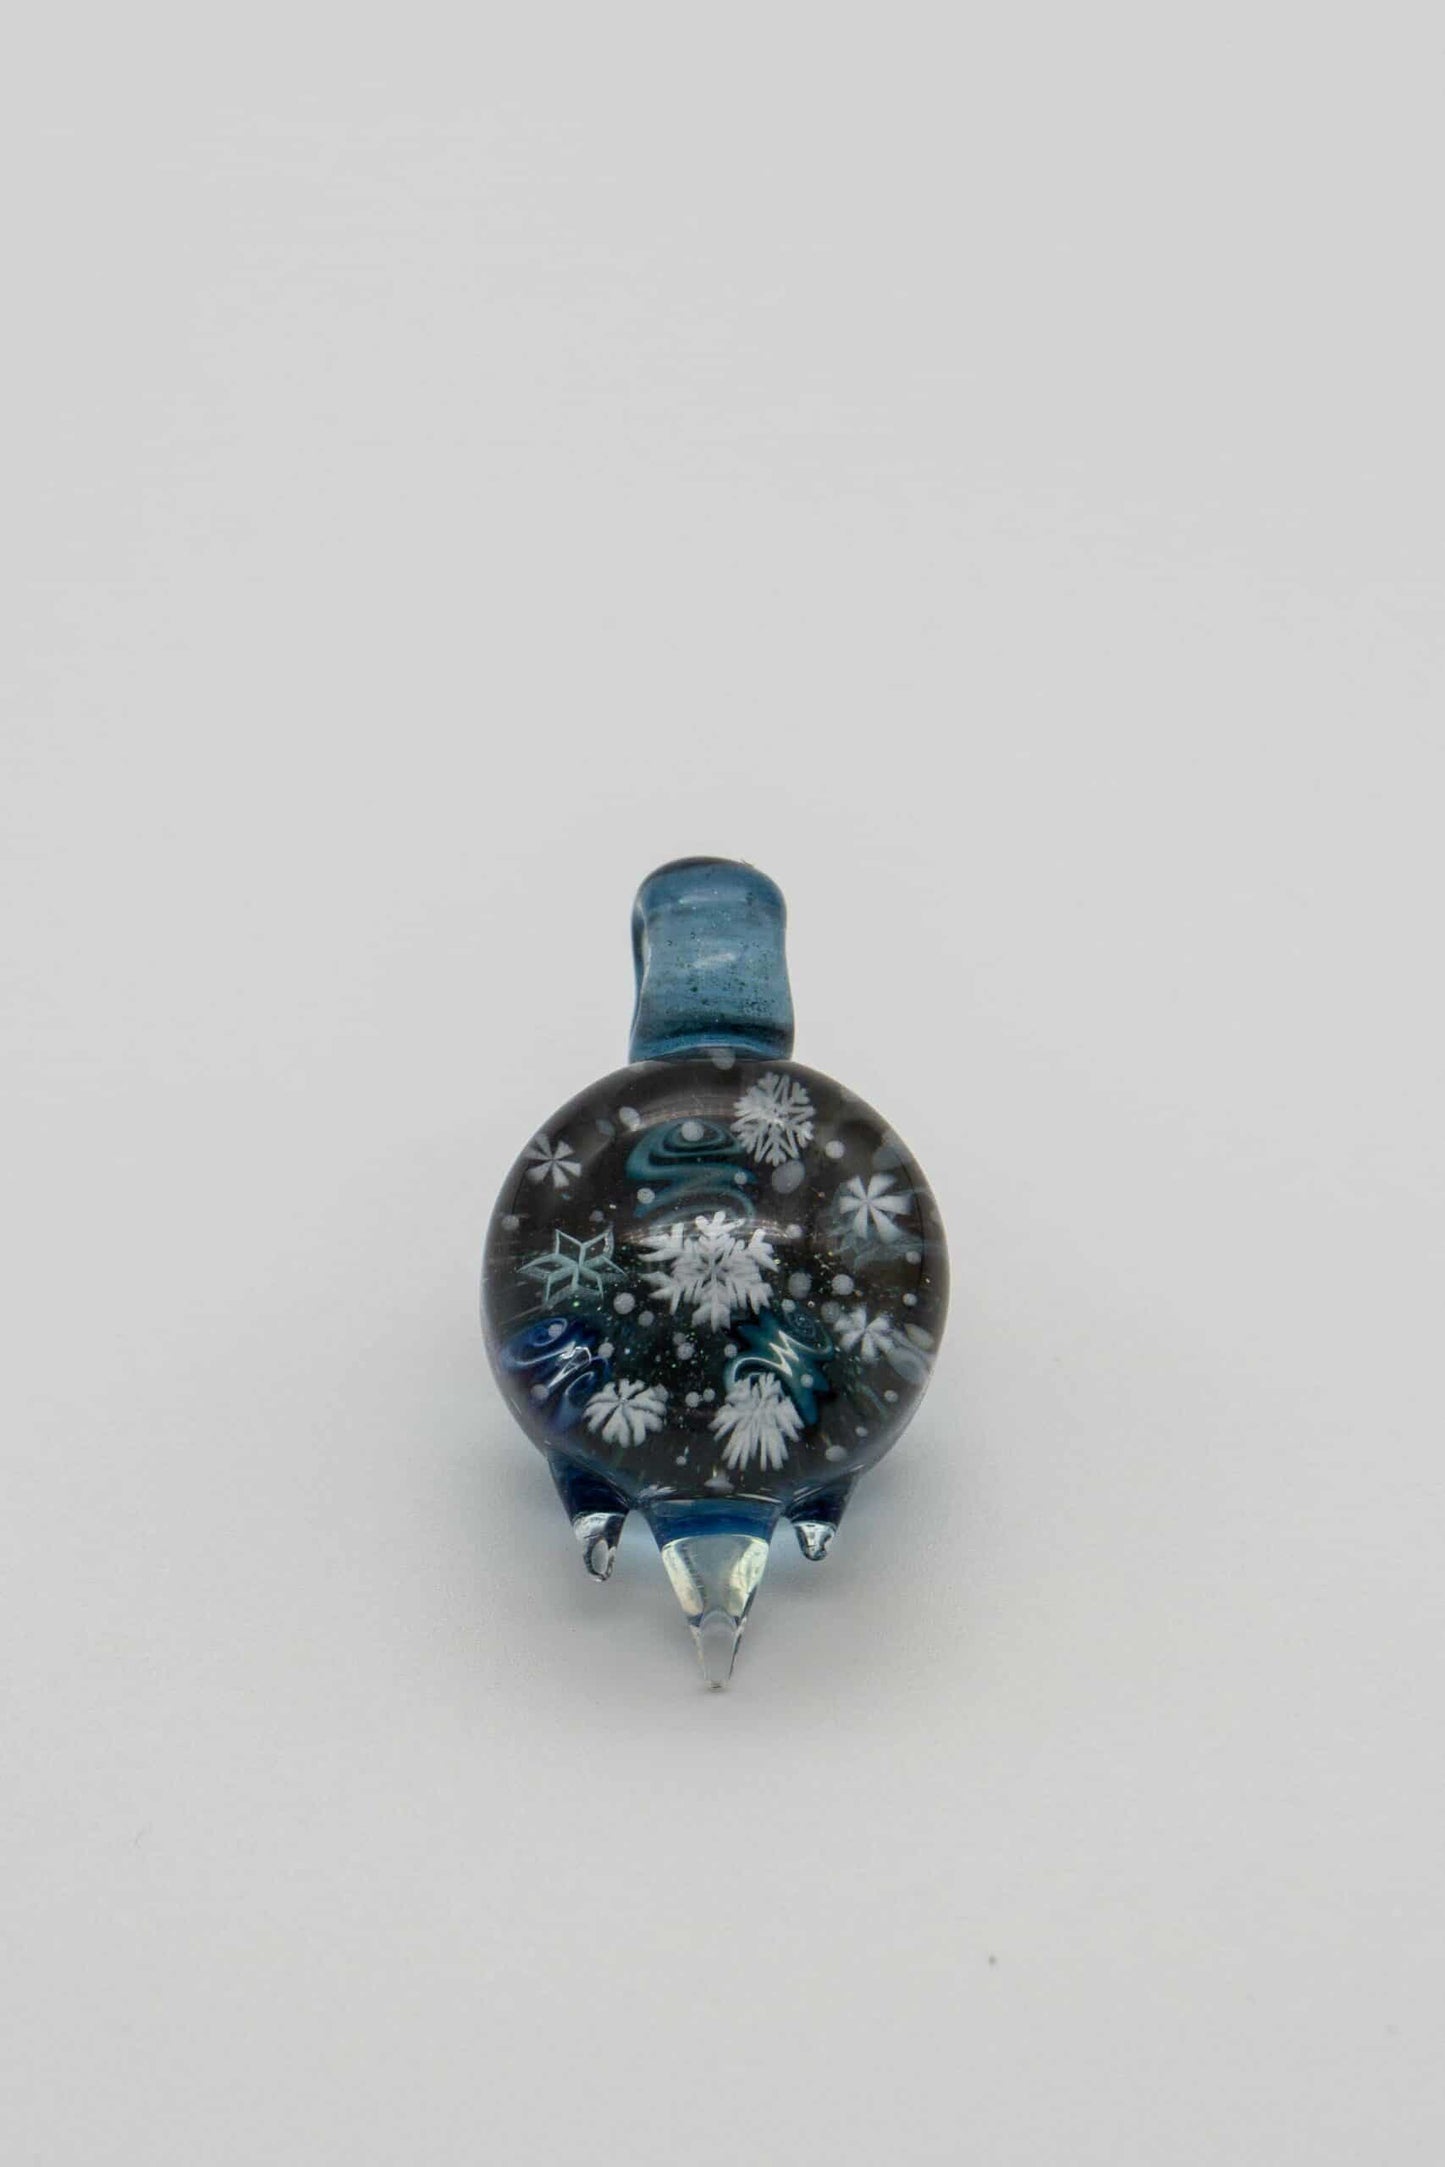 hand-blown glass pendant - Blizzard Pendant by Chaka Glass